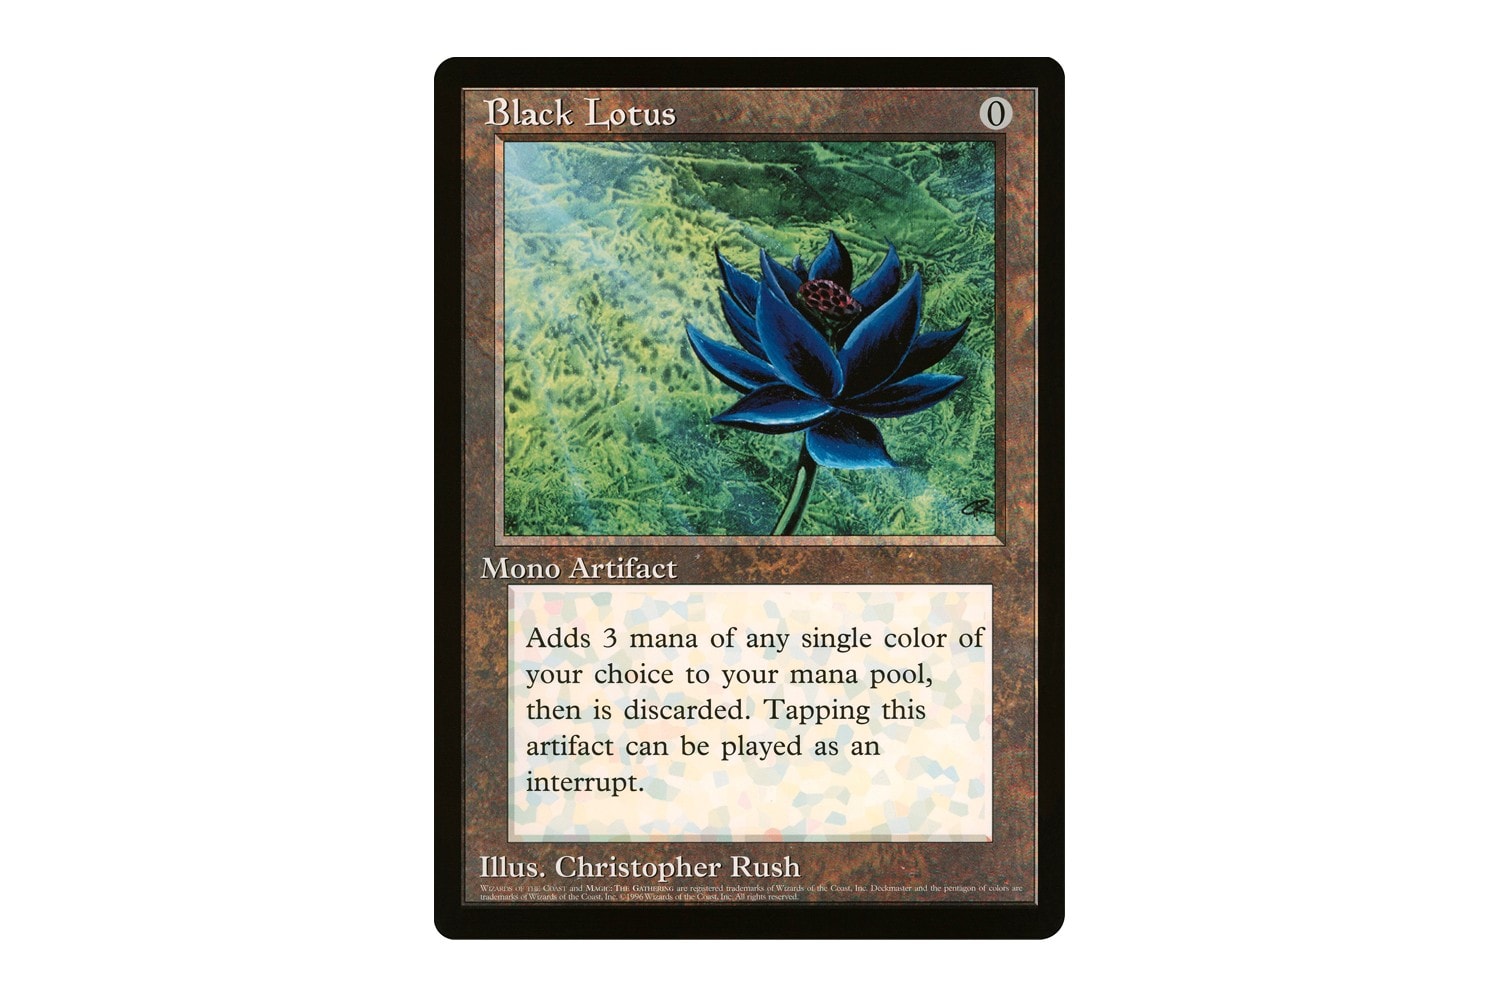 Magic The Gathering PSA 10 Alpha Black Lotus Card Sold eBay 250K USD Info